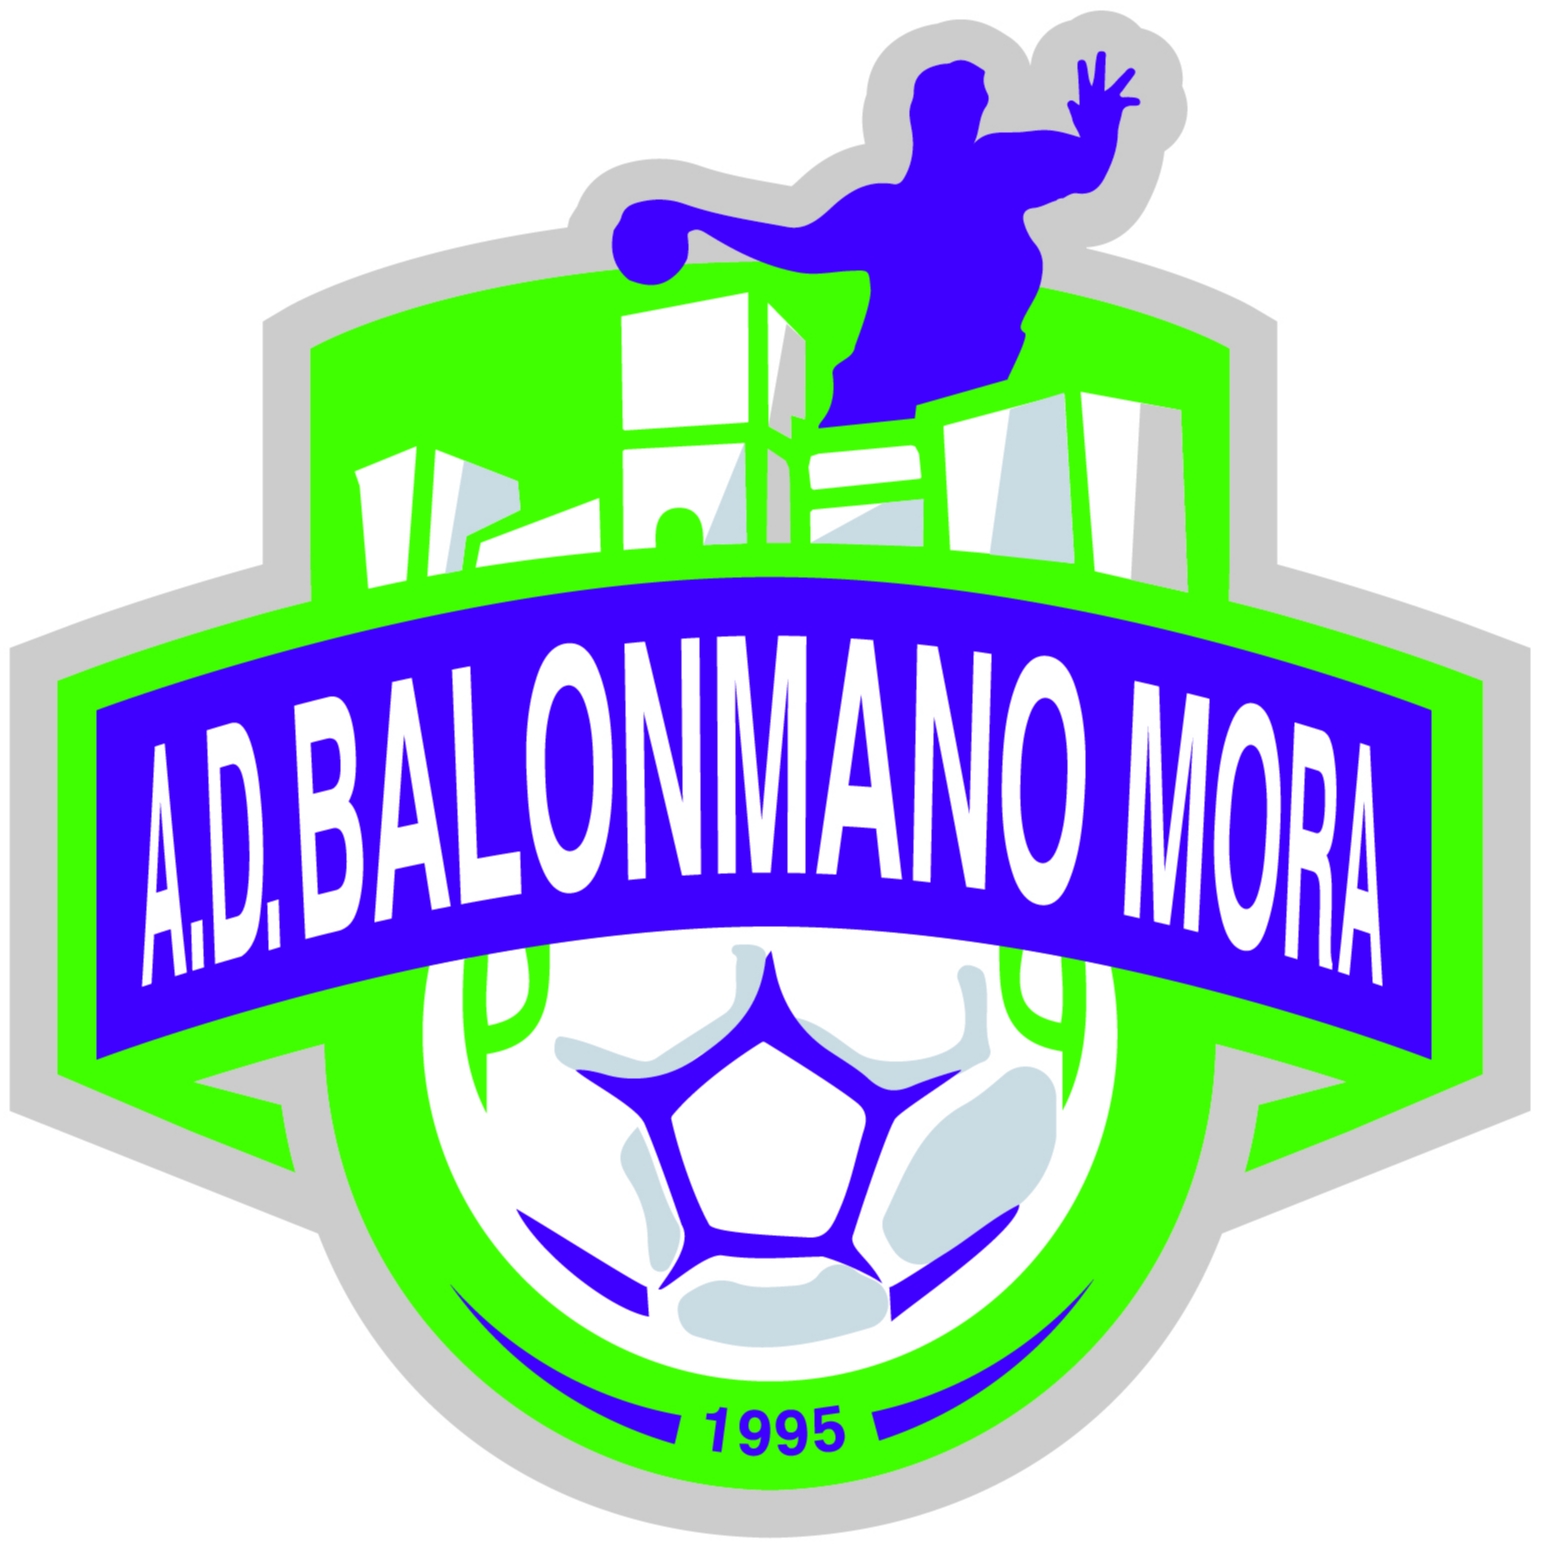 A.D Balonmano Mora Morado